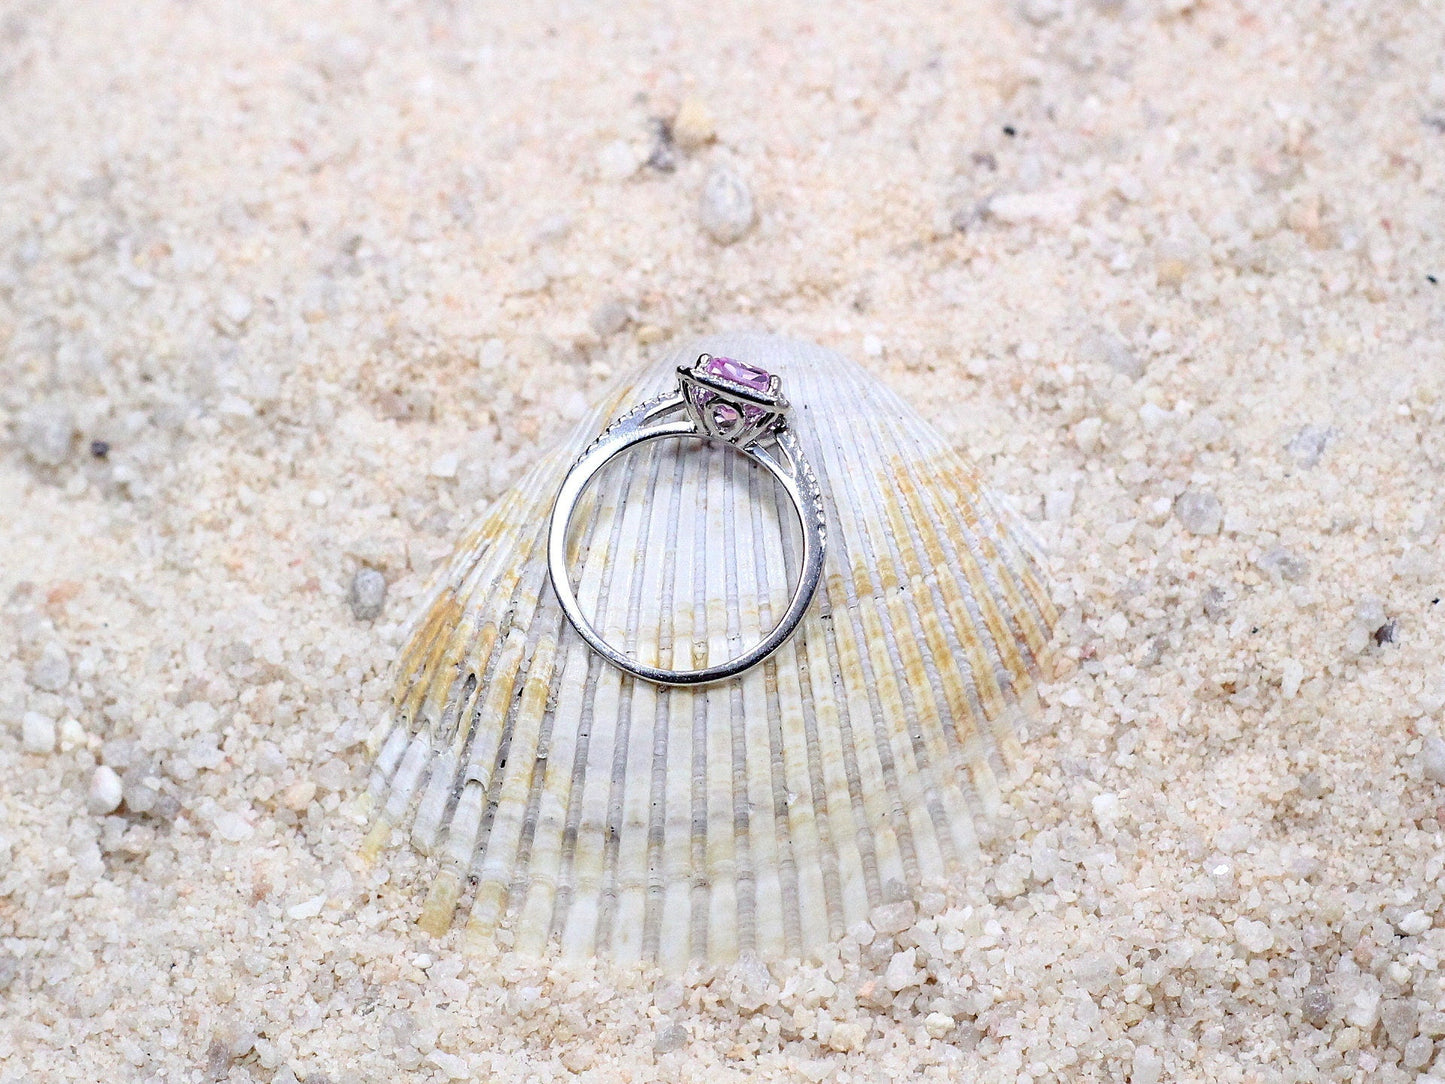 Pink Sapphire Engagement Ring, Emerald Cut Ring, Halo, Hemera, 2ct BellaMoreDesign.com